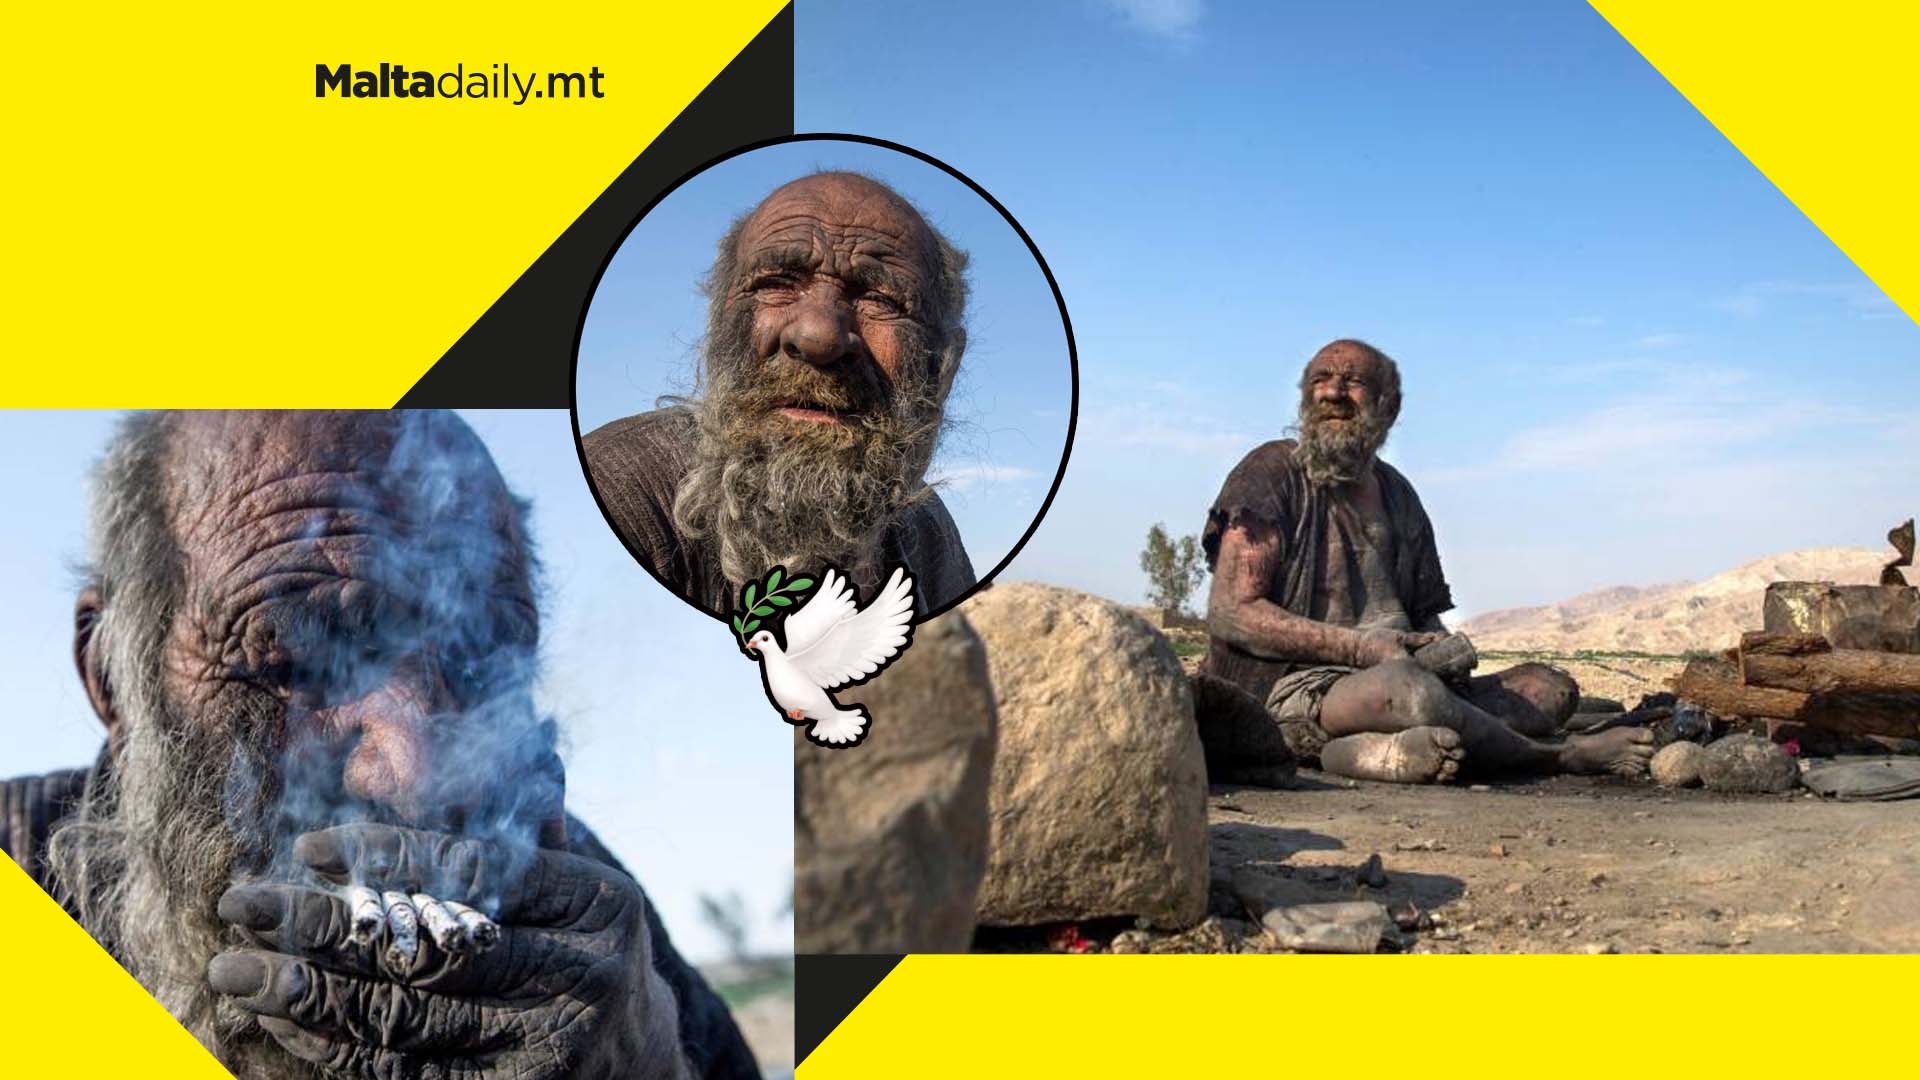 World’s dirtiest man Amou Haji dies at age 94 in Iran